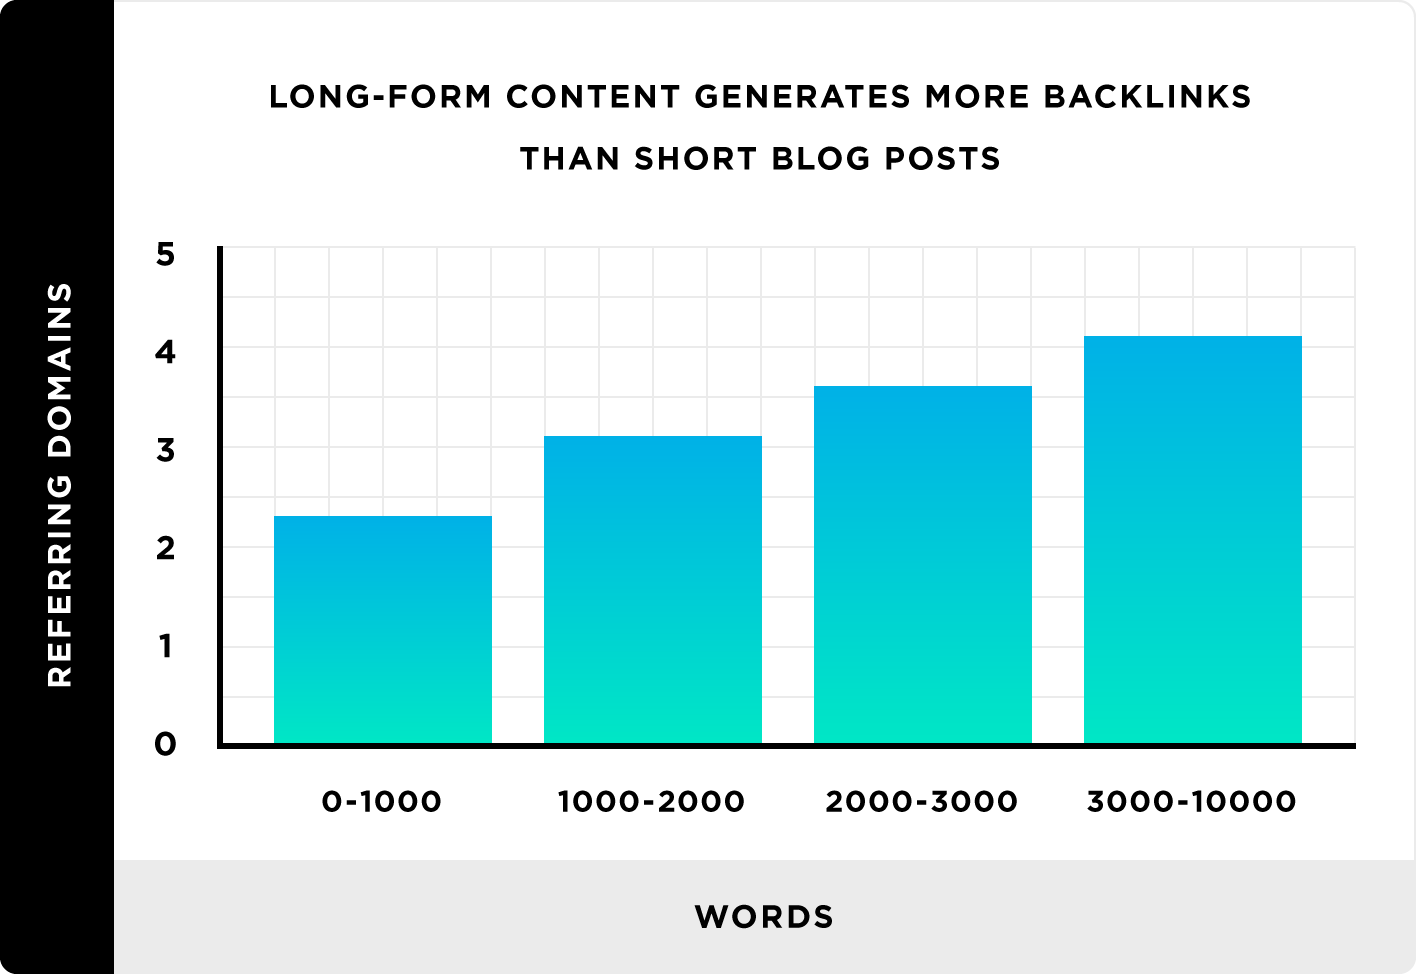 Long-form content generates more backlinks than short blog posts